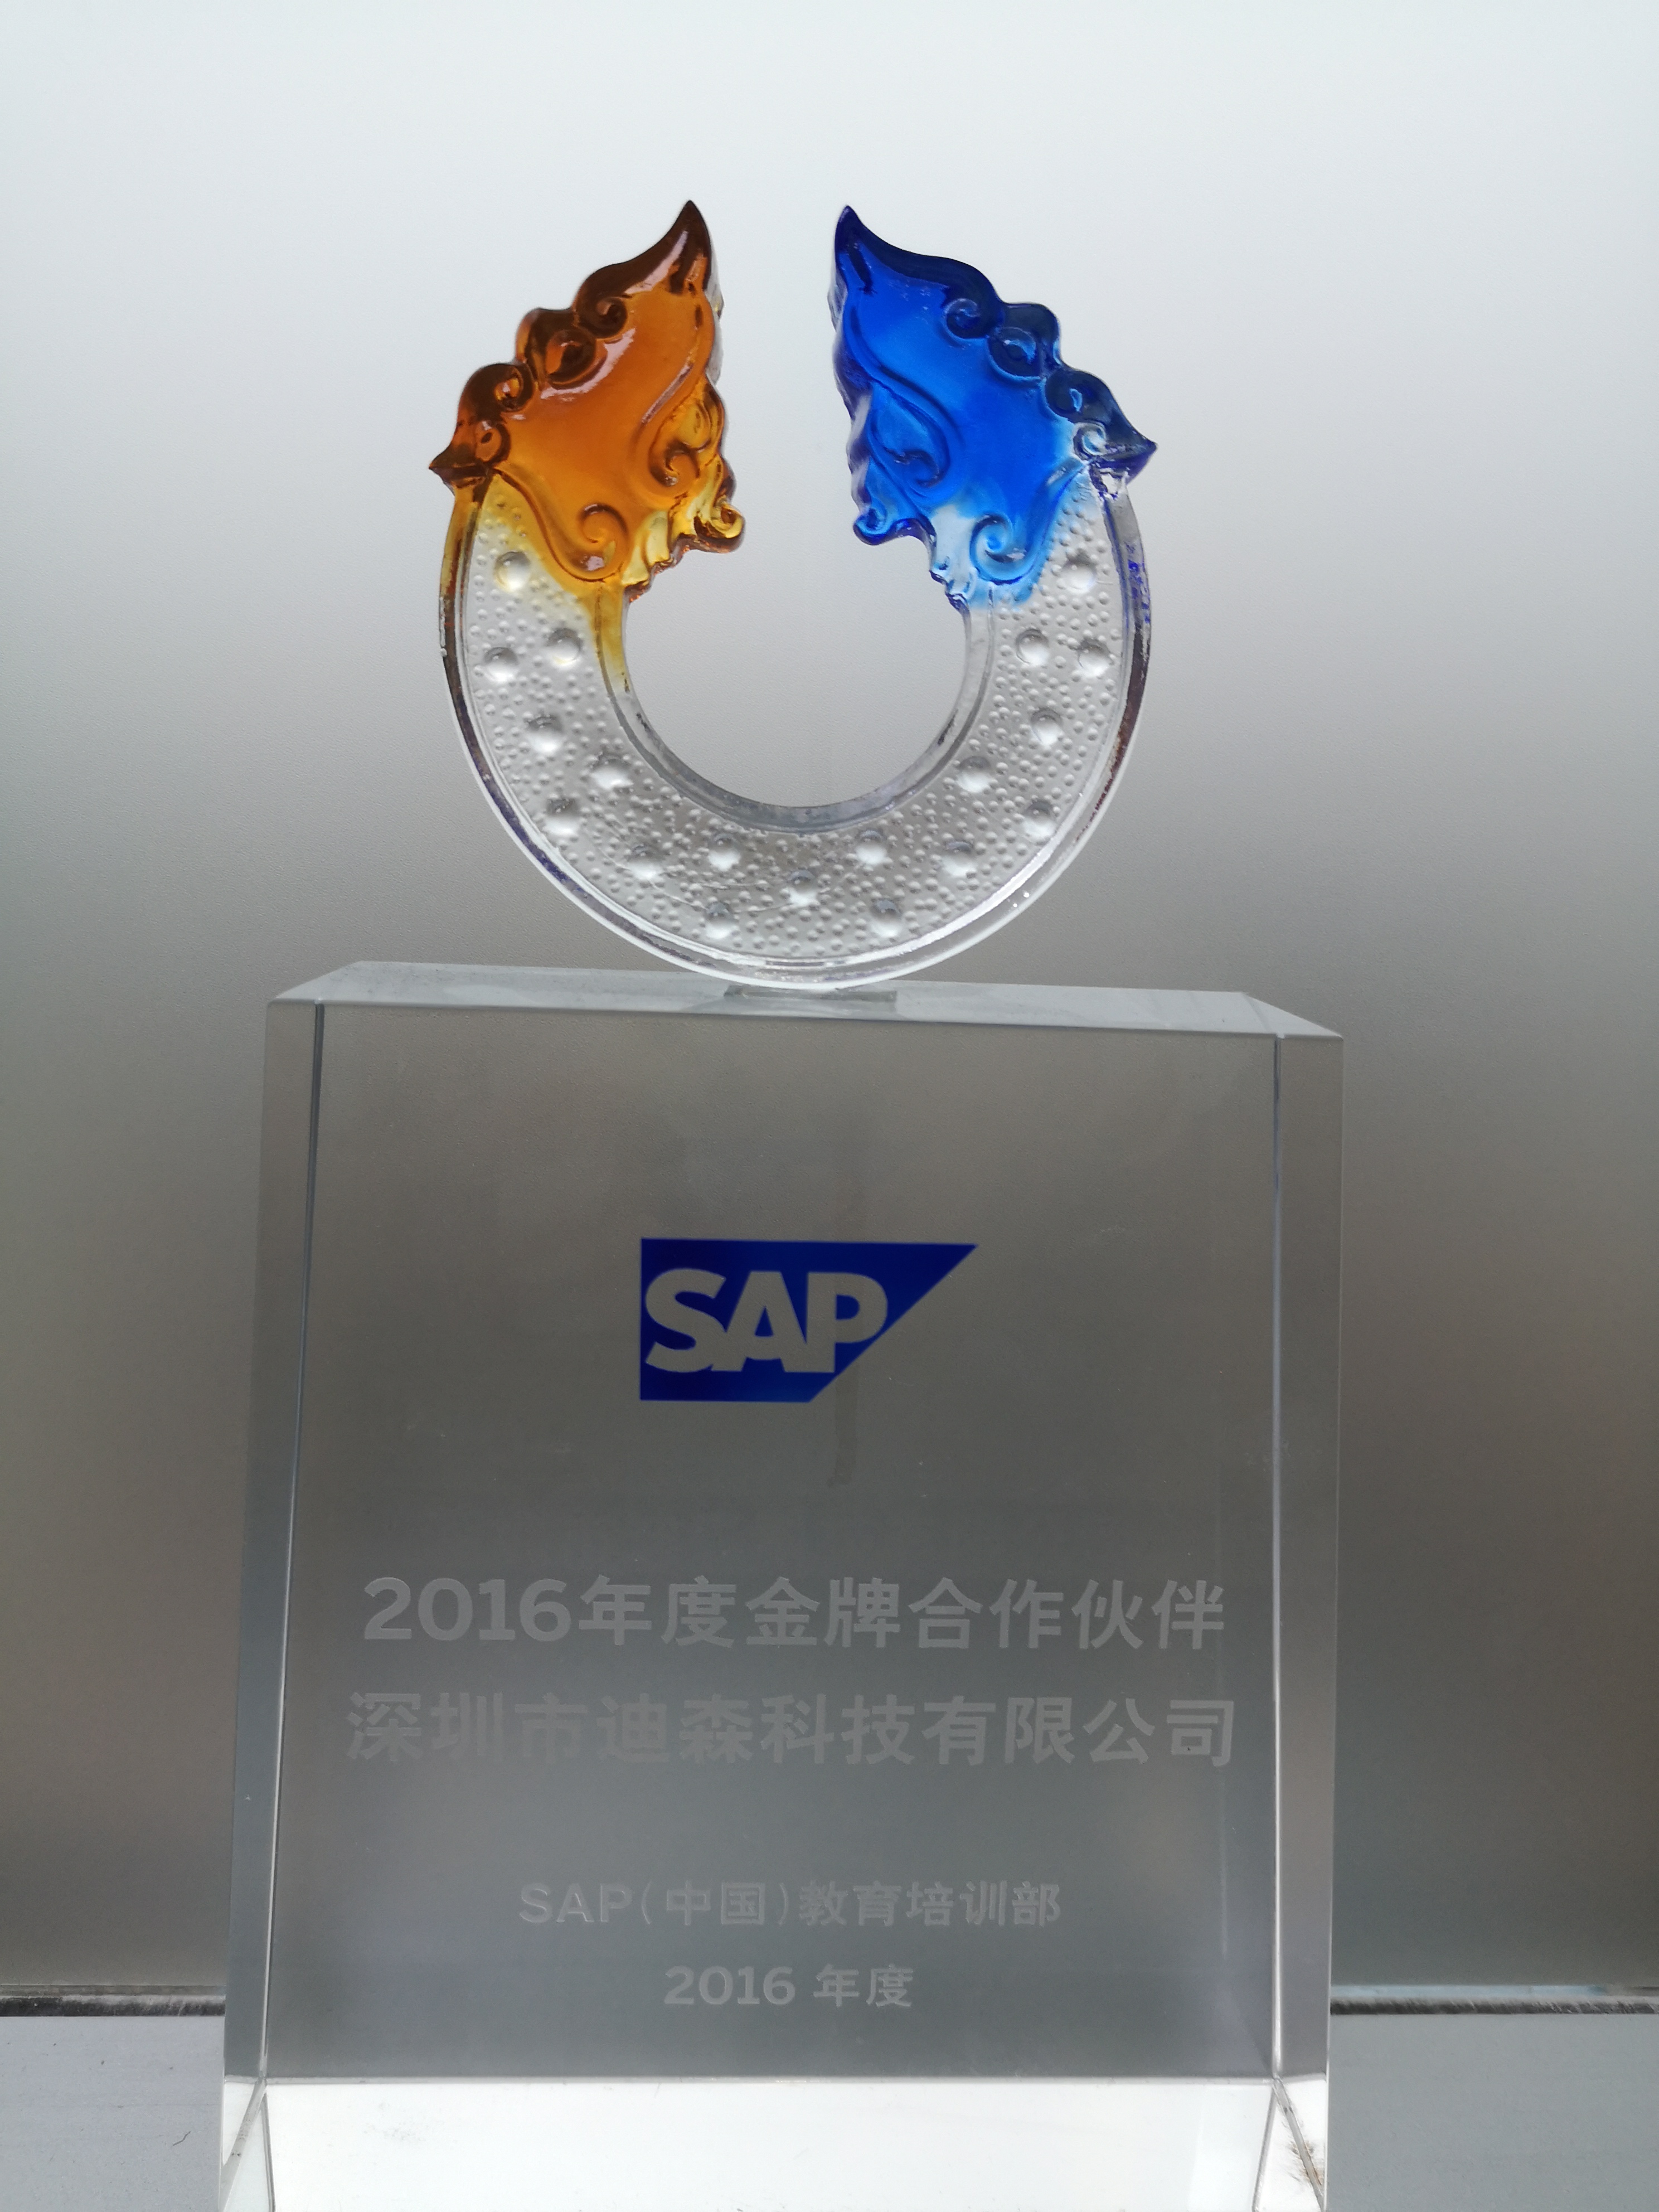 SAP Gold partner